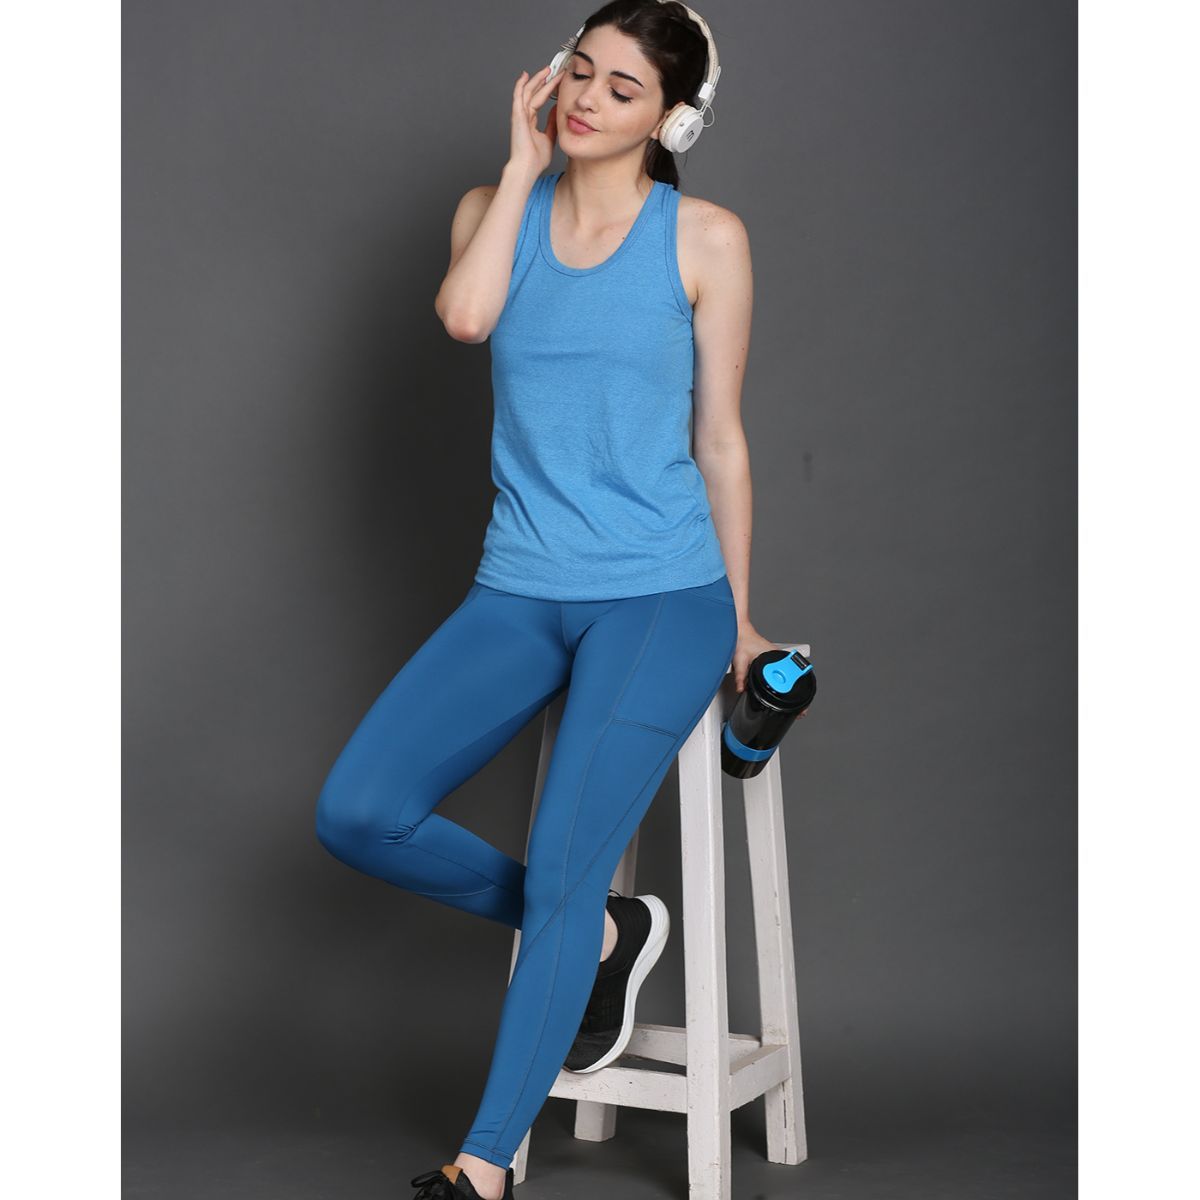 Snapklik.com : Essentials Women High Waist Workout Leggings Side Pockets  Yoga Tummy Control Running Print Pants1362-White Leopard Print-L